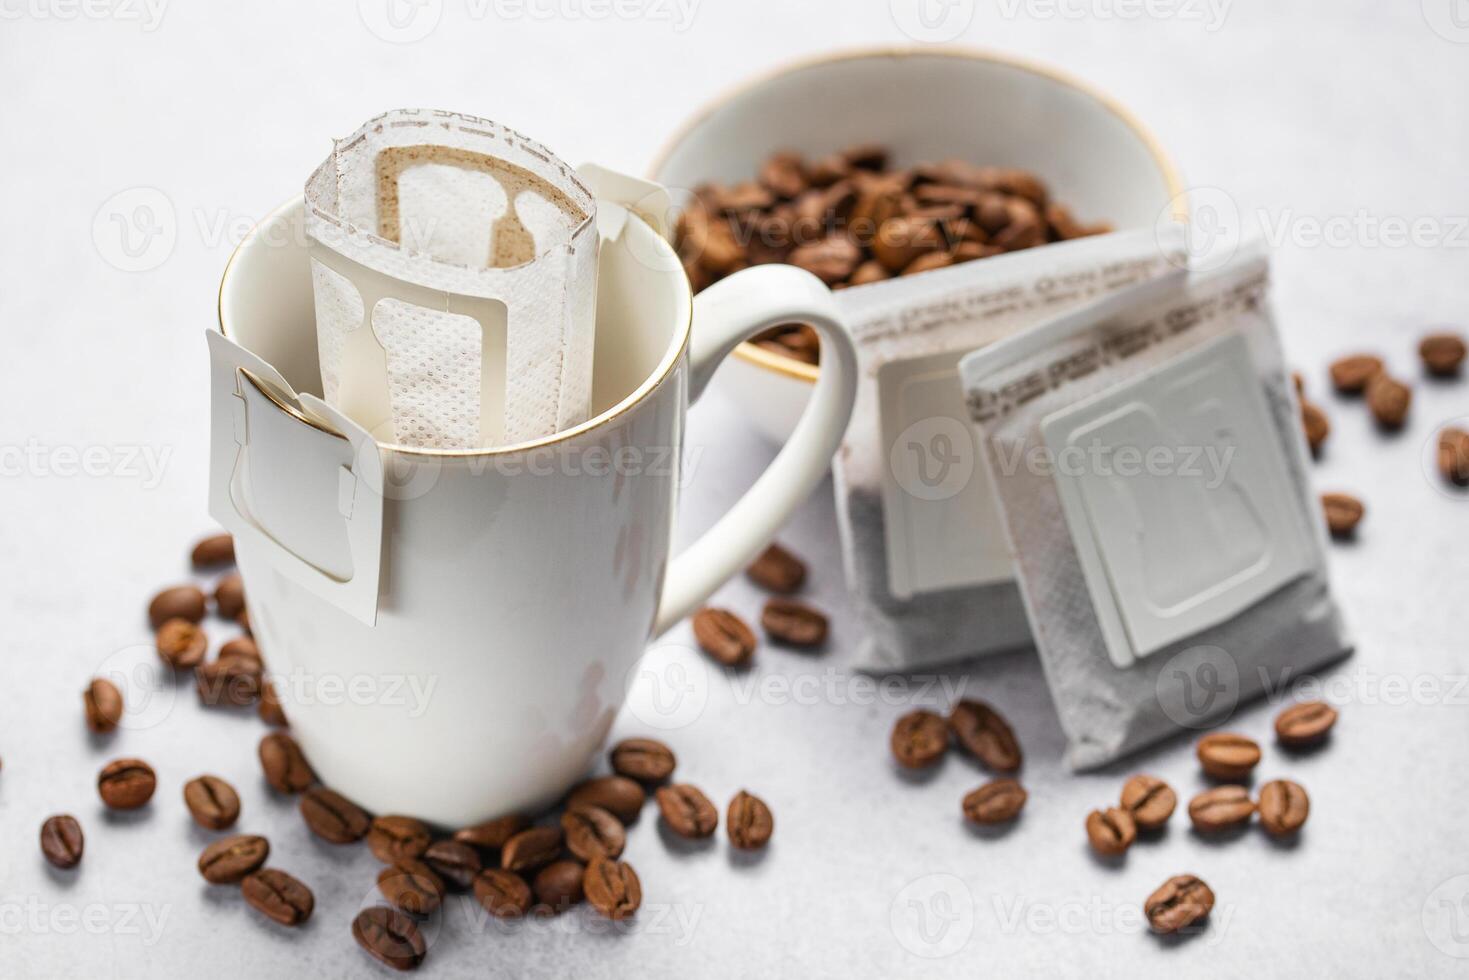 druppelen koffie zak met grond koffie in kop foto